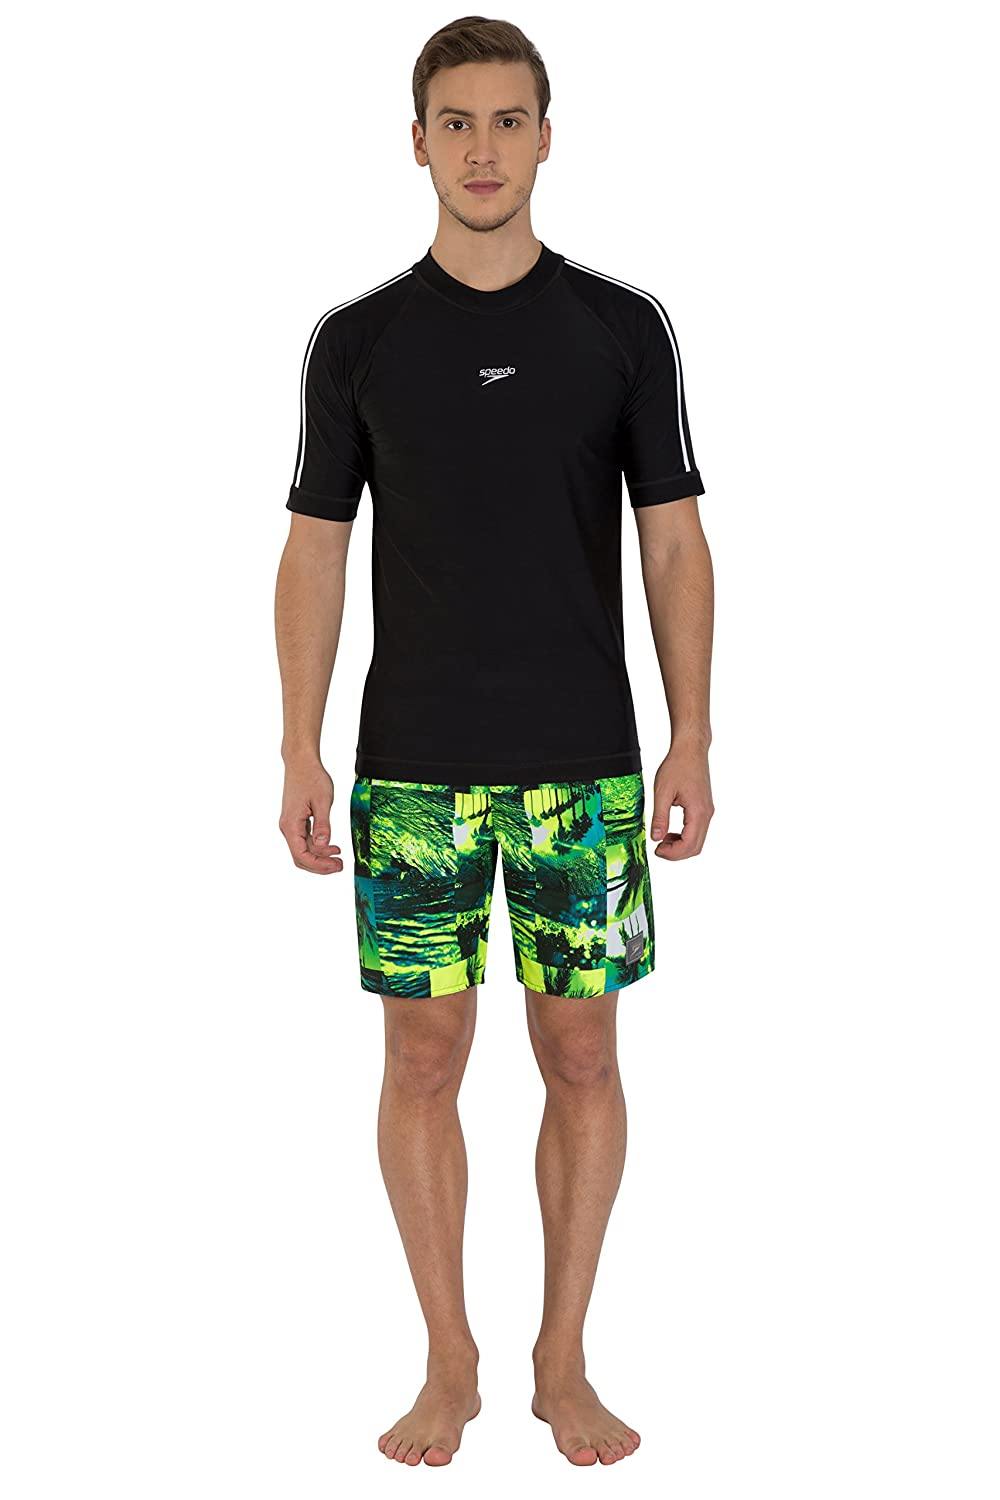 Speedo Male Swimwear Short Sleeve Suntop (8PSM013503_Black/White) - Best Price online Prokicksports.com